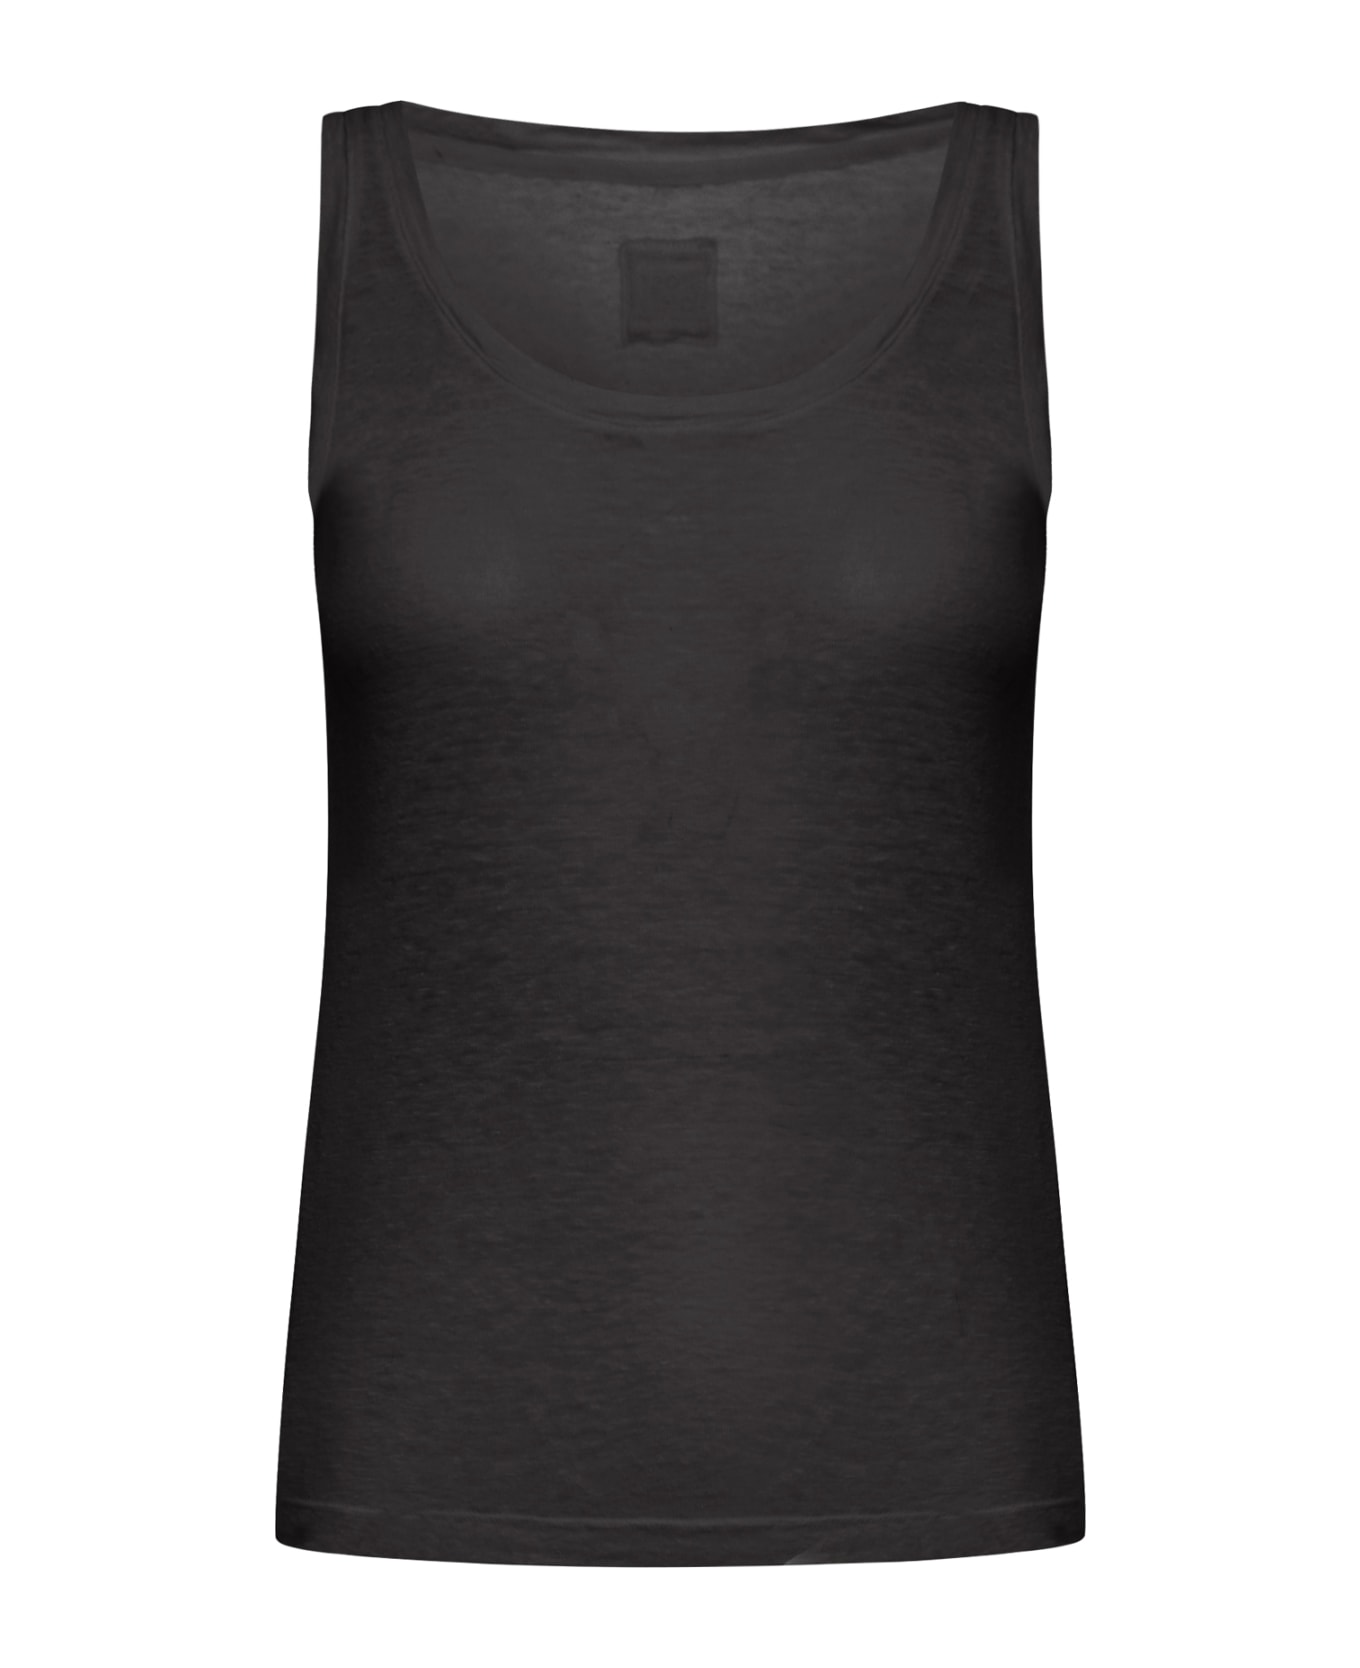 120% Lino Unsleeved Woman T-shirt - R Black タンクトップ